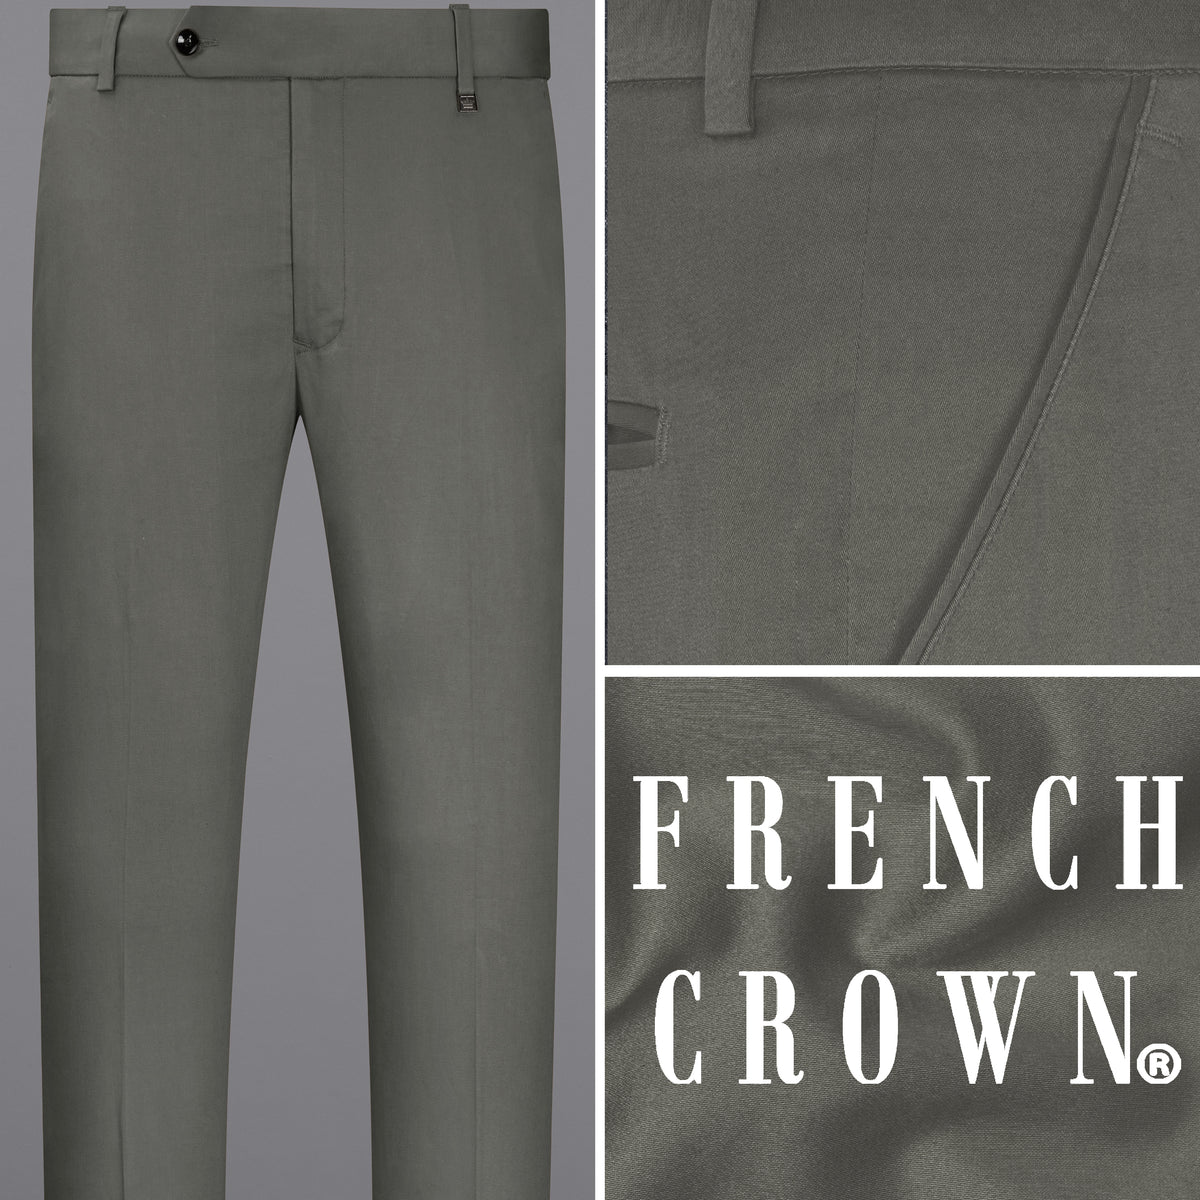 Buy Grey Cotton Pant Style Suit Online : France 